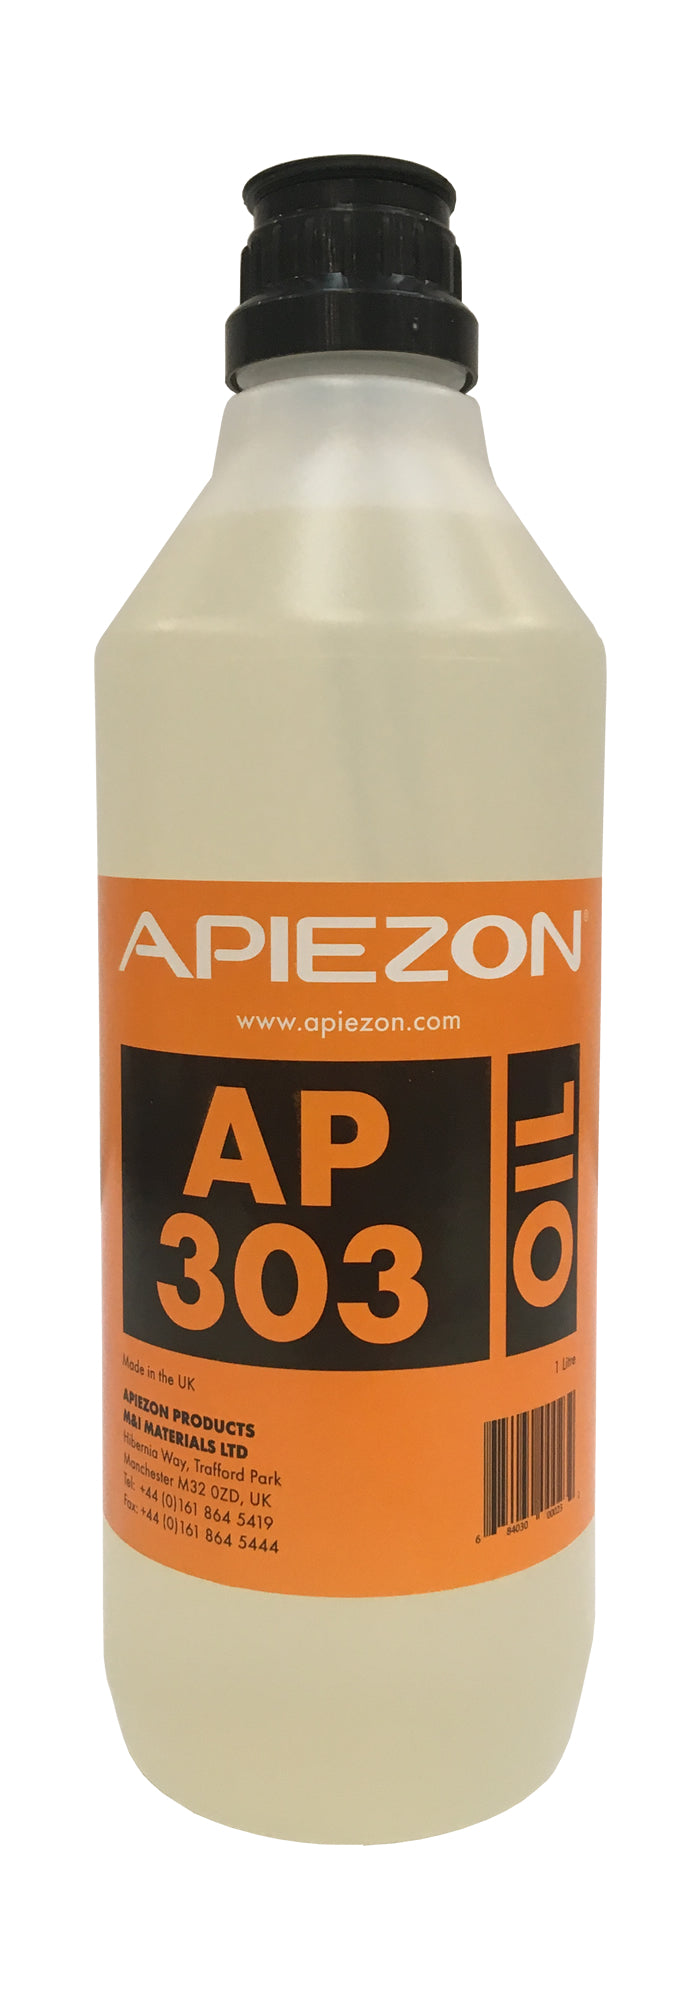 Apiezon AP303 - Nano Vacuum Australia and New Zealand